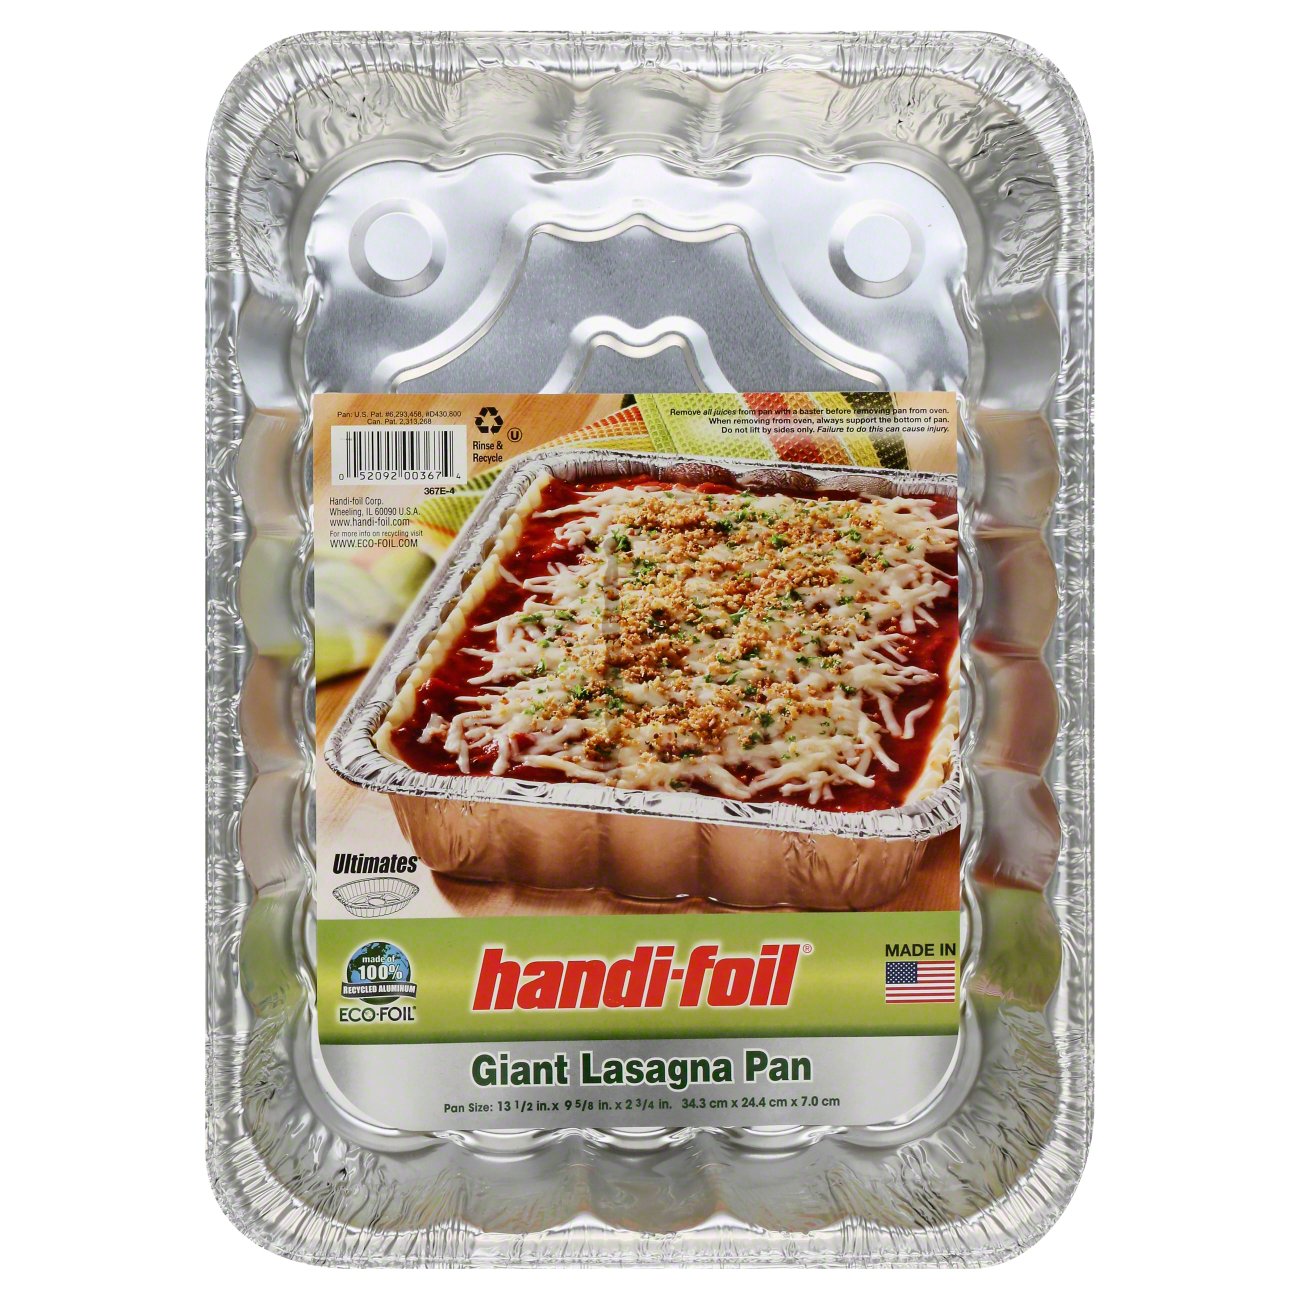 Jiffy-Foil Giant Lasagna Pan